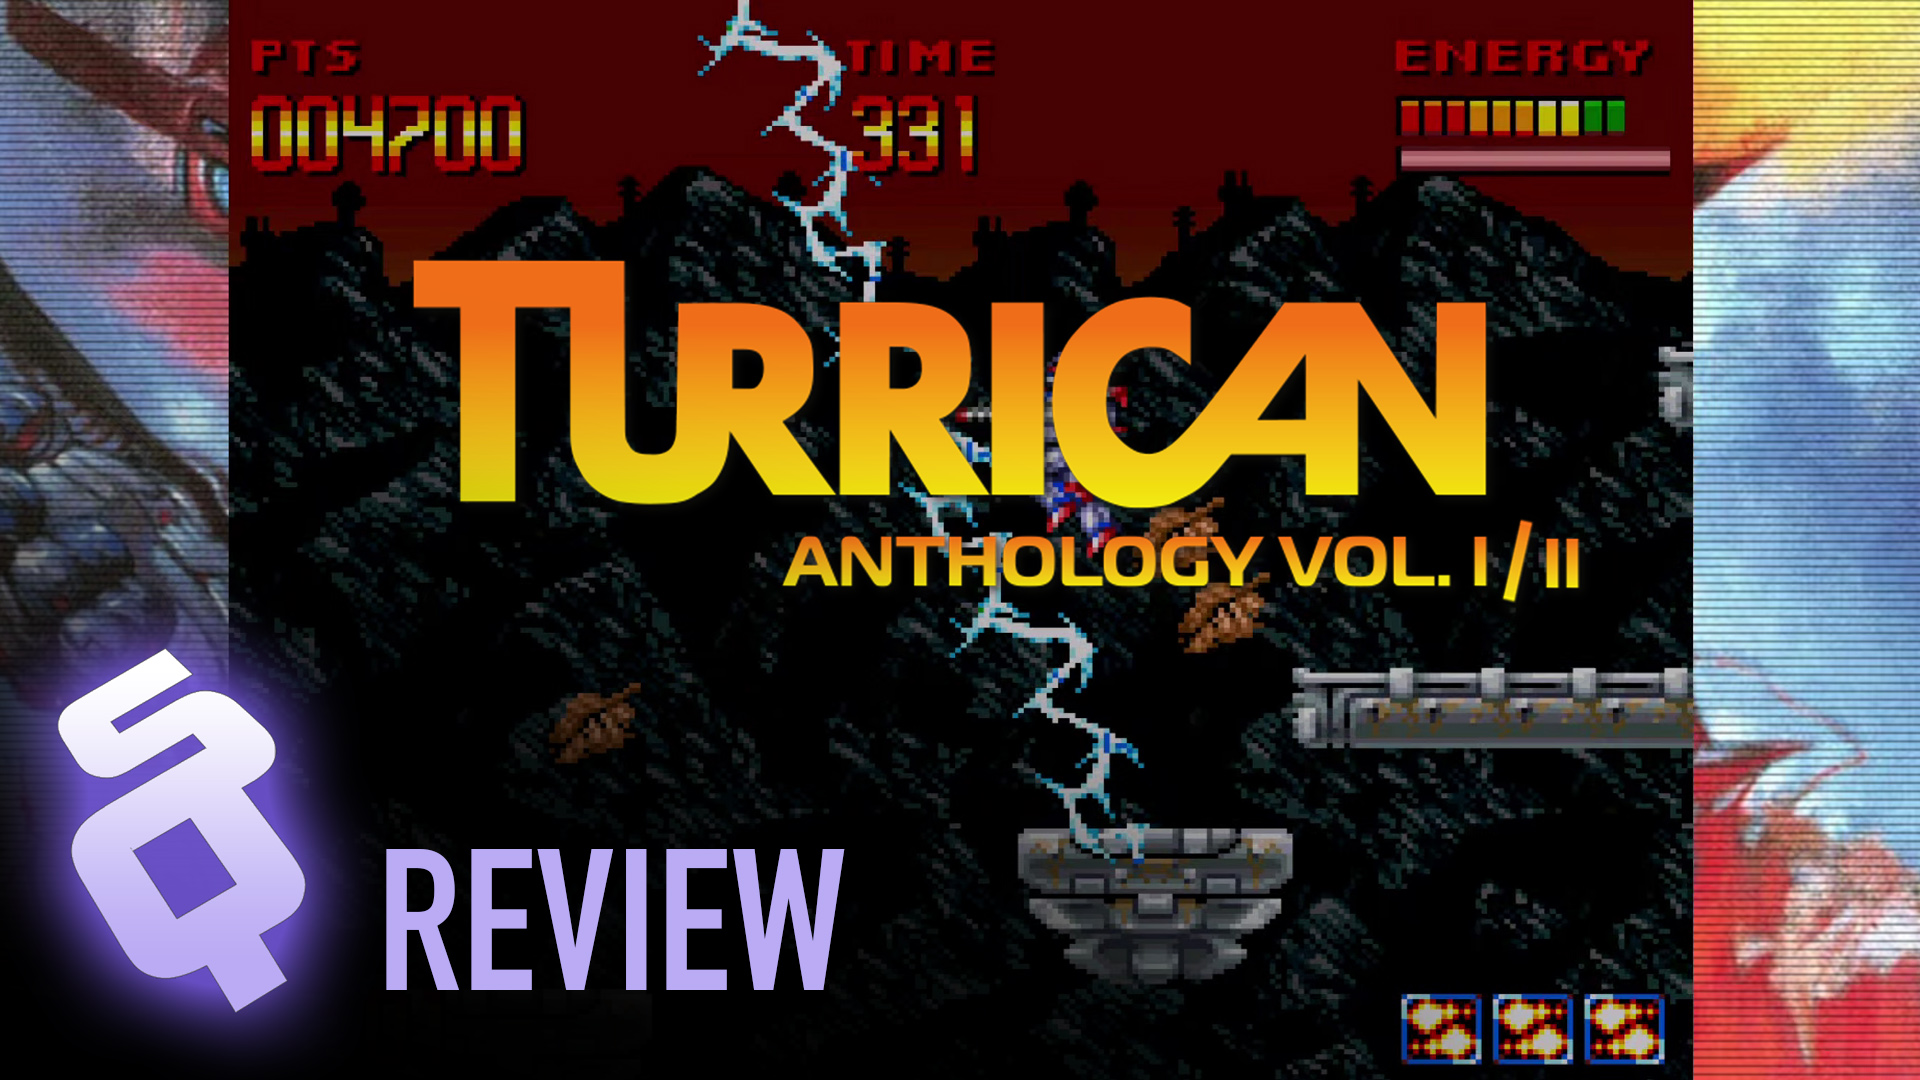 Turrican Anthology Vol I & Vol II review